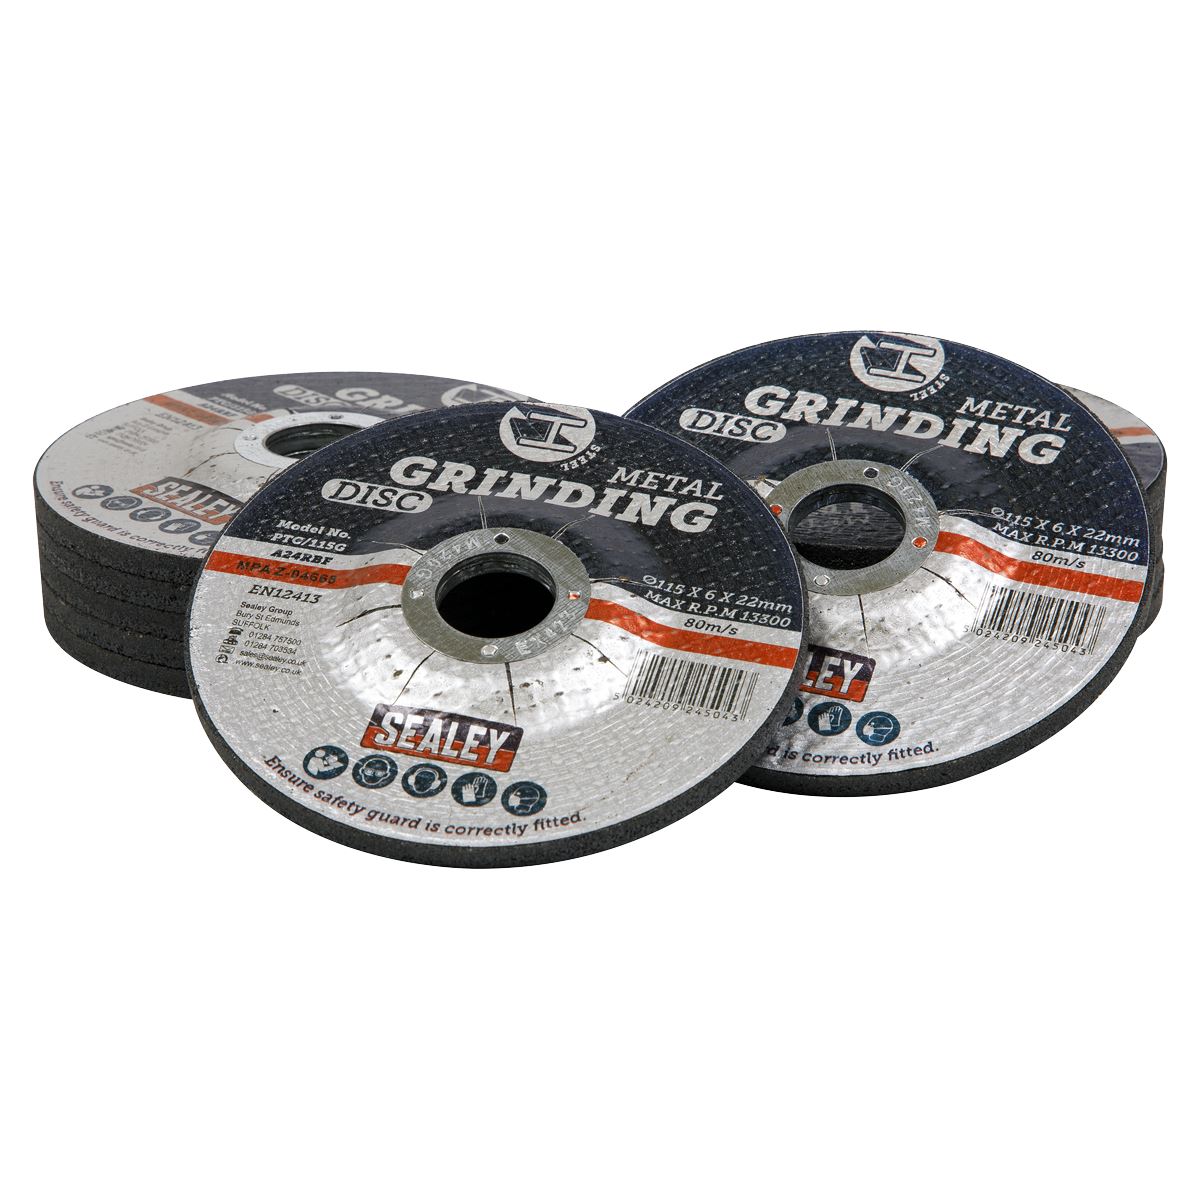 Sealey Grinding Disc Ø115 x 6mm Ø22mm Bore - Pack of 12